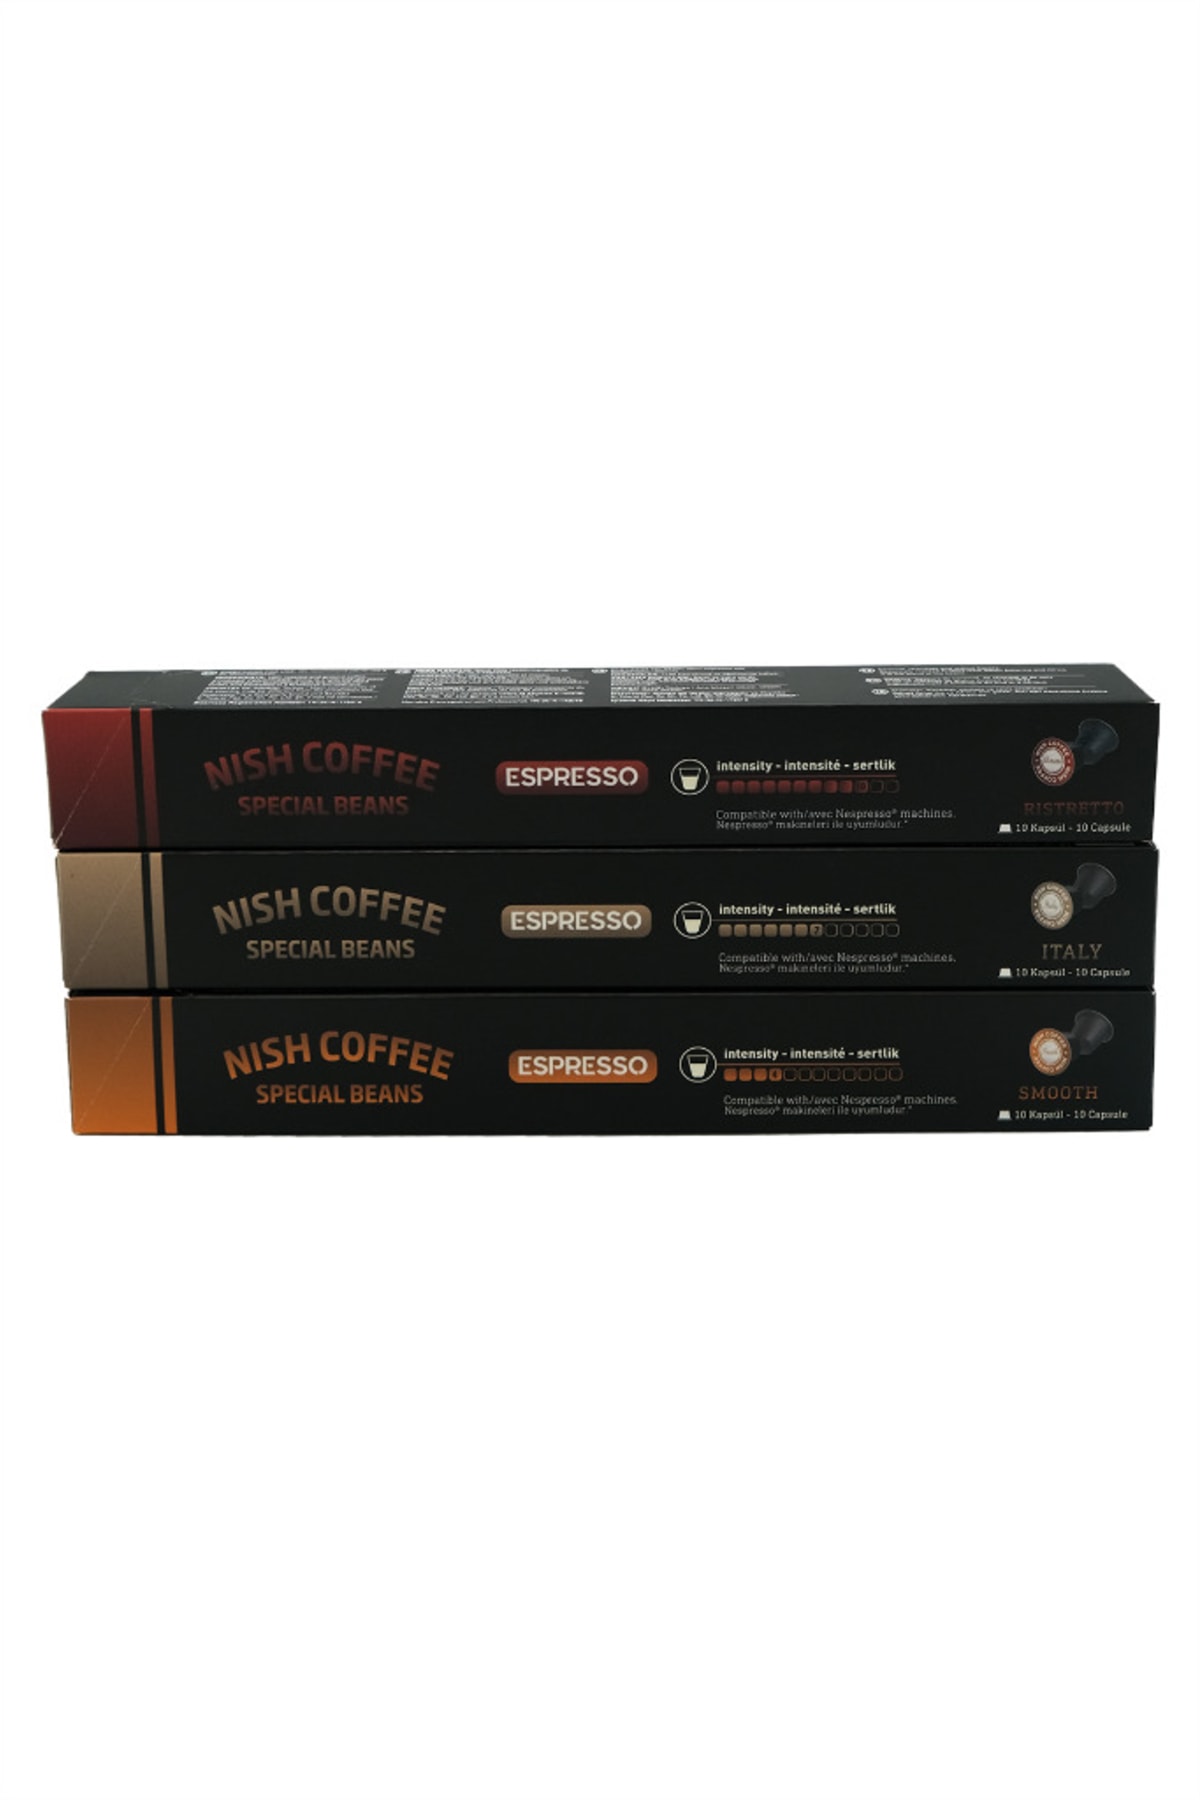 Nish Kahve Nish Nespresso Uyumlu Kapsül Kahve 4smooth 8ıtaly 10ristrett